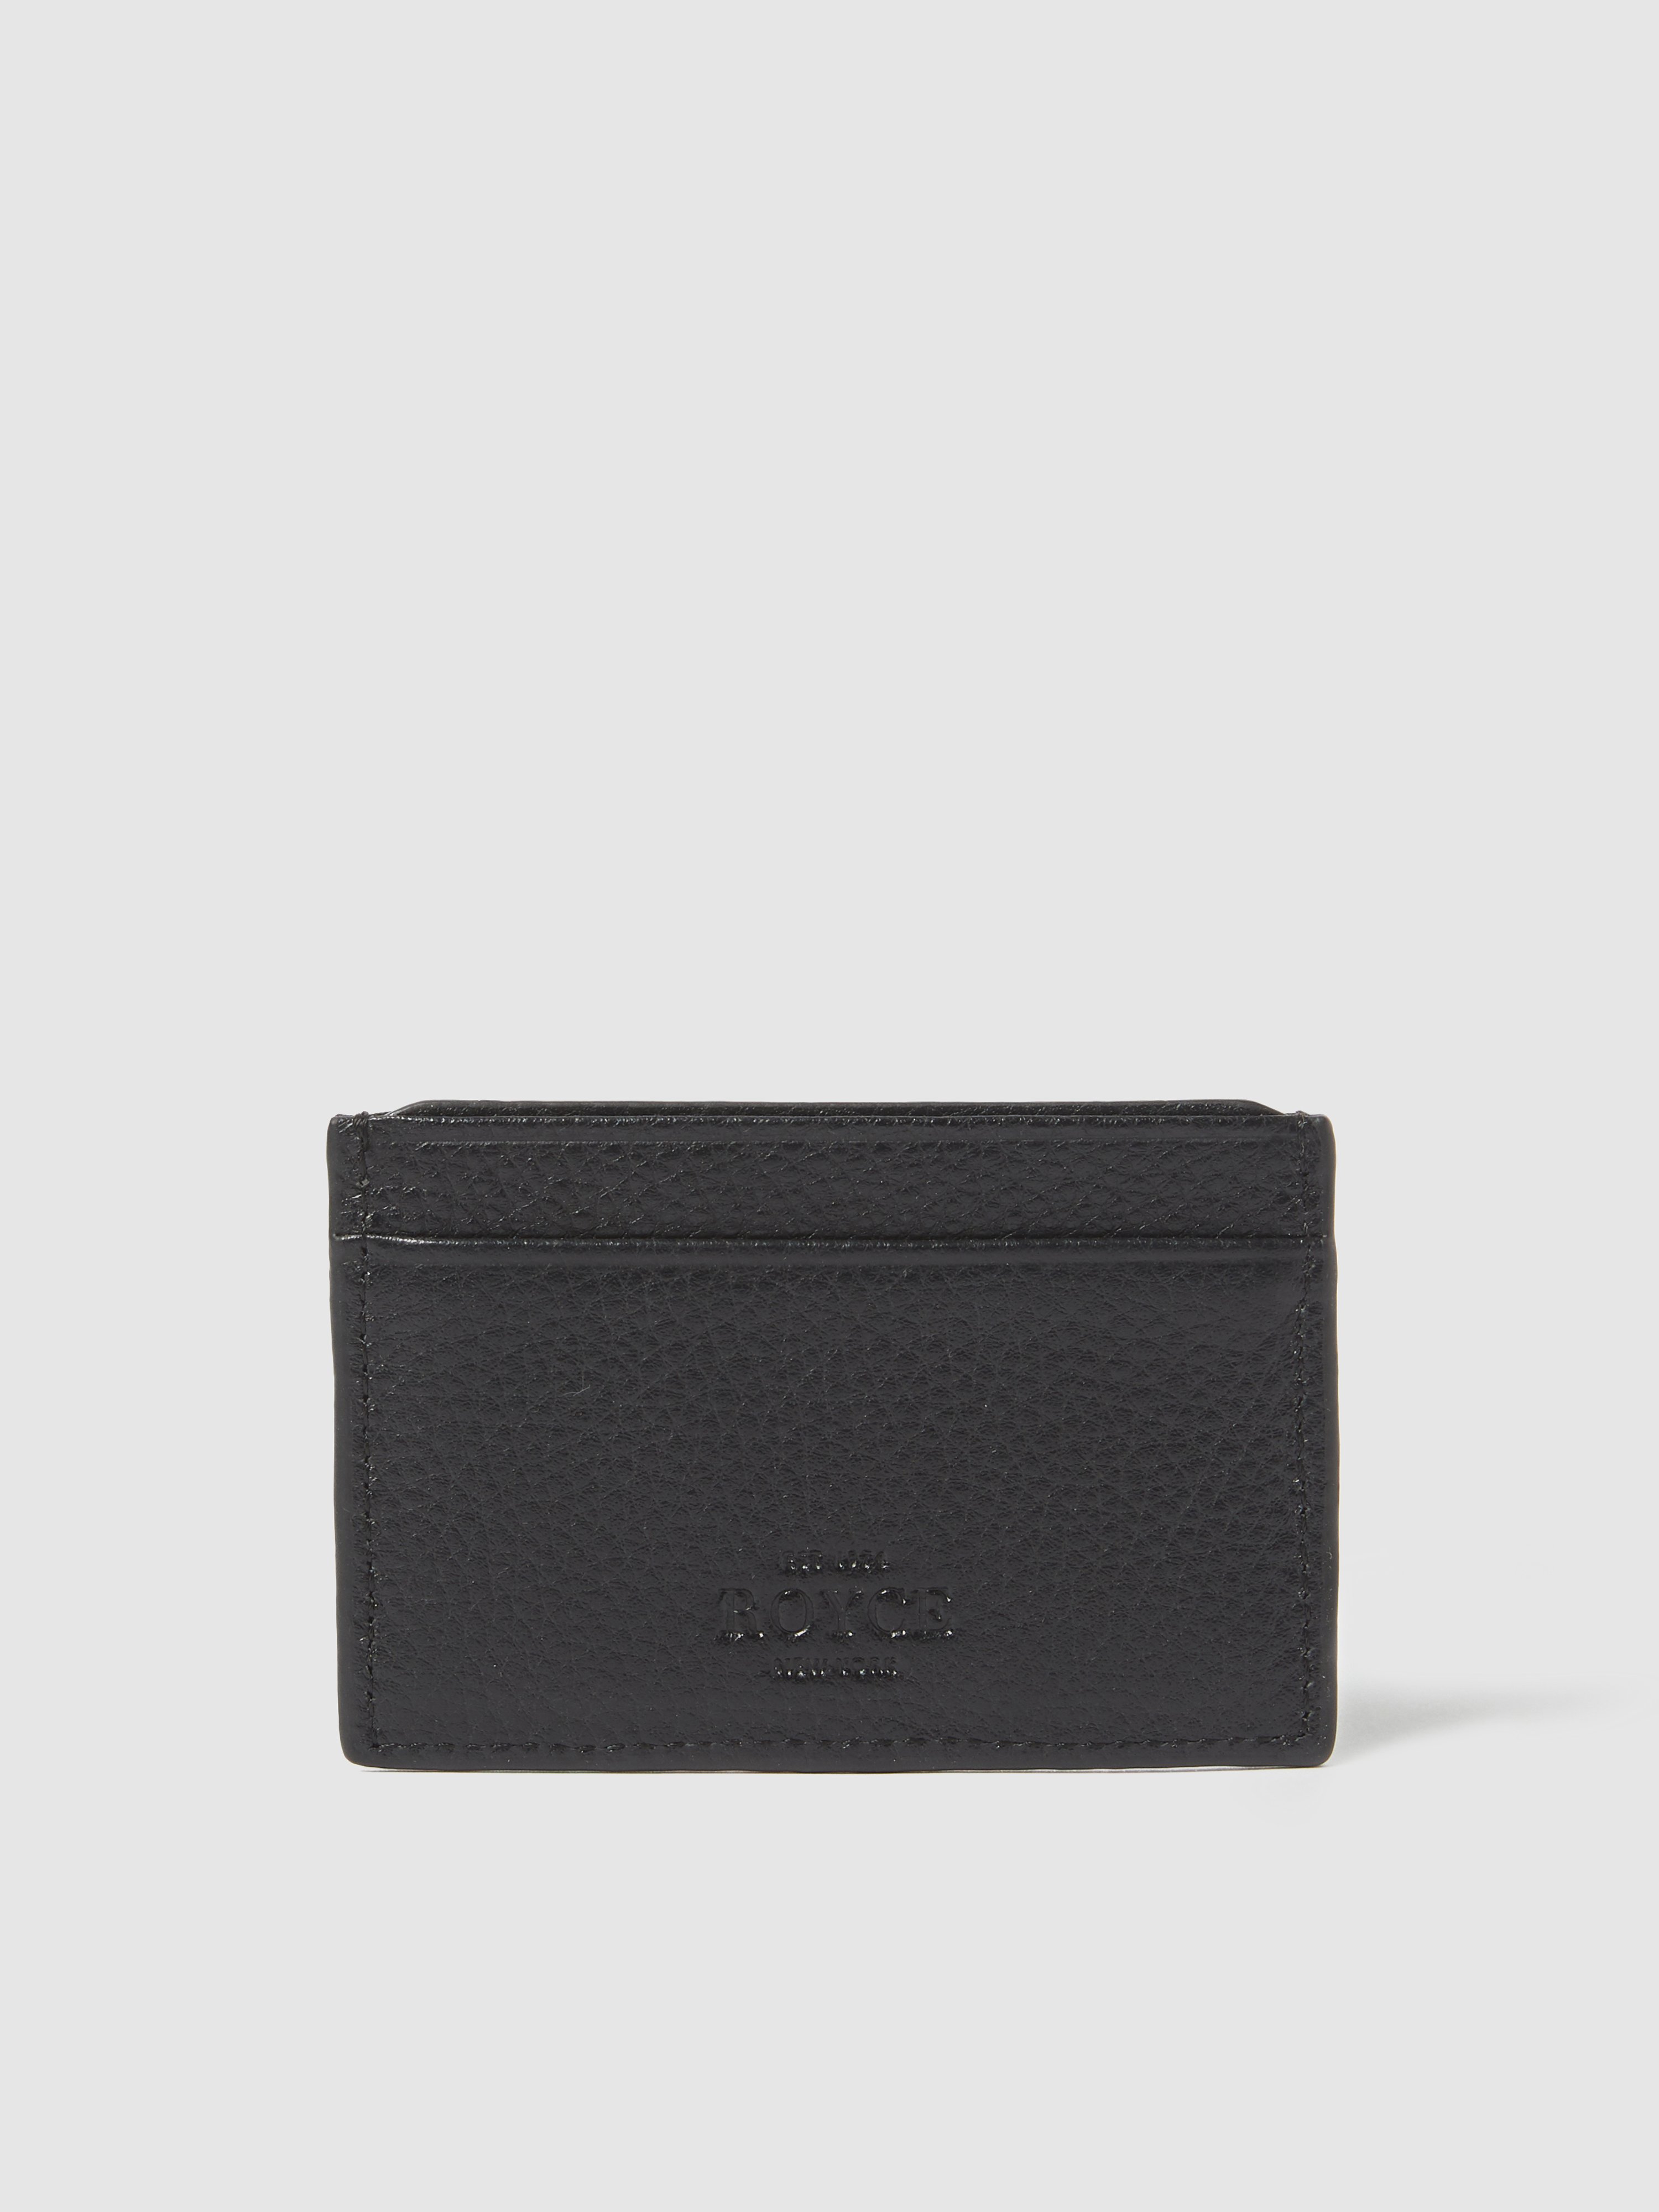 Royce New York Rfid Blocking Credit Card Holder In Black